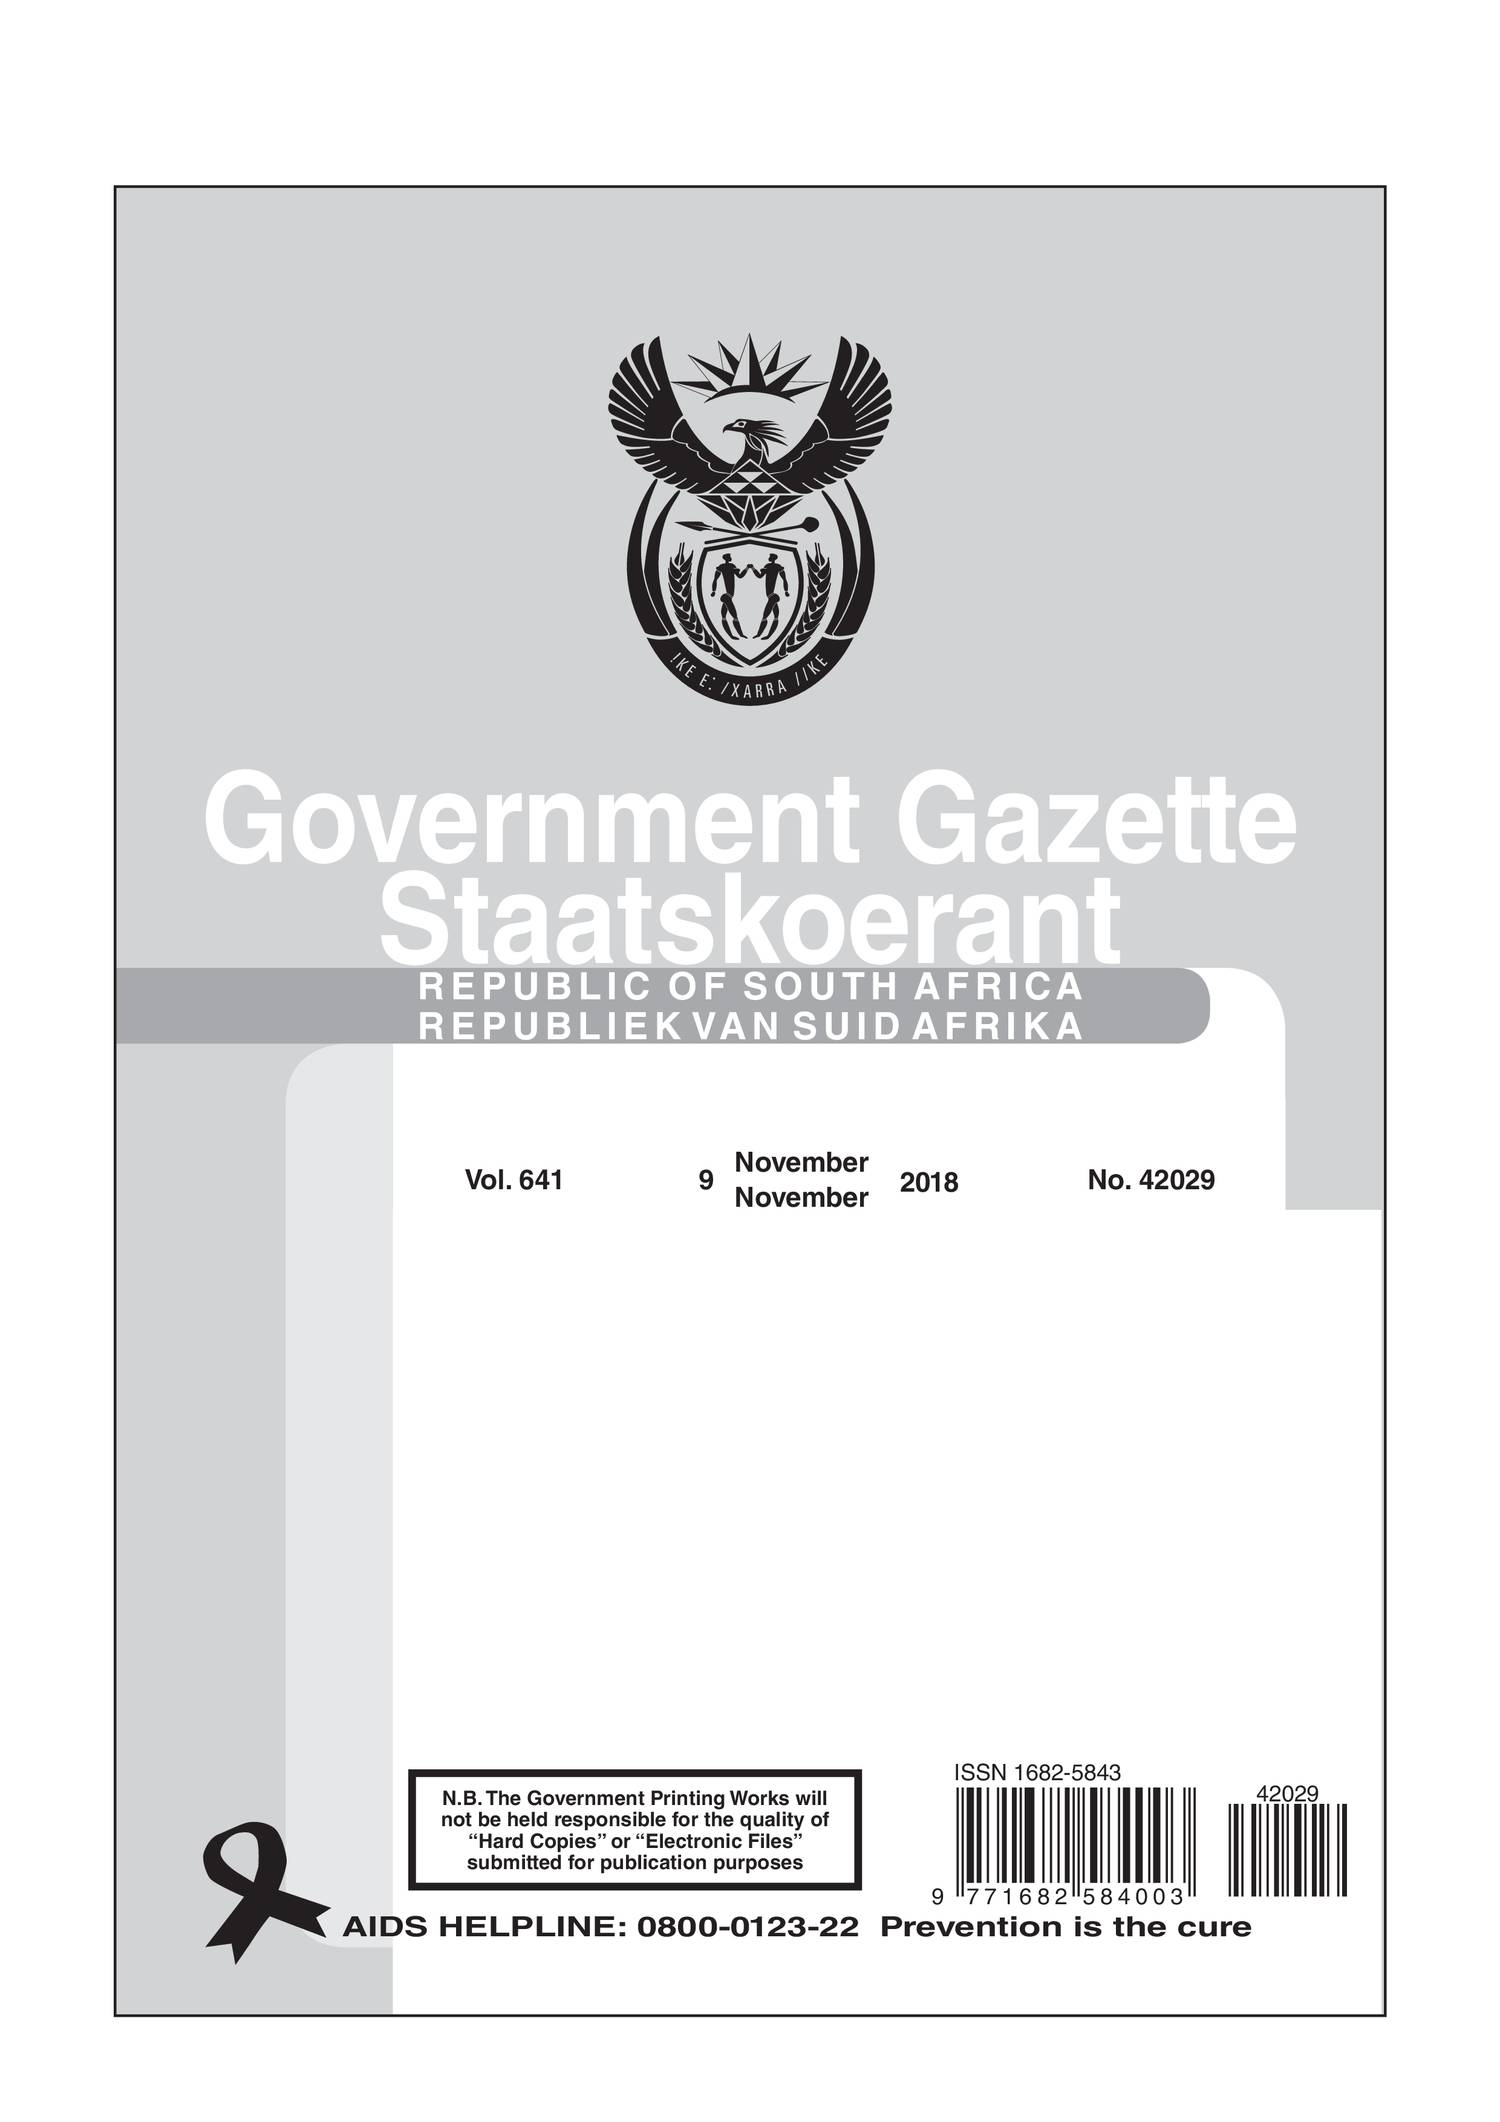 Government Gazettepdf Docdroid